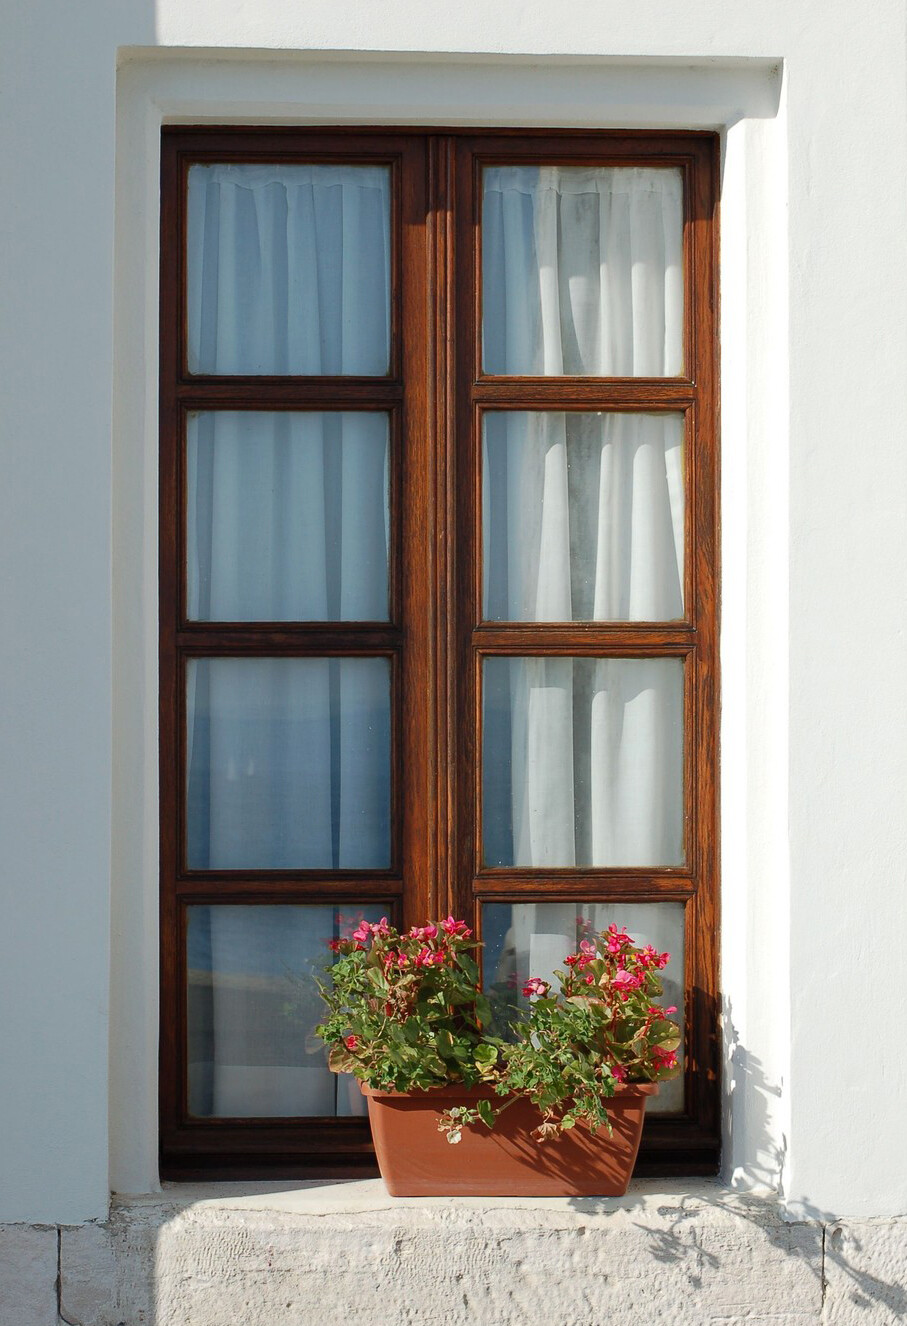 一窗之隔-By RebeccaSeamons-Simple white Italian window.